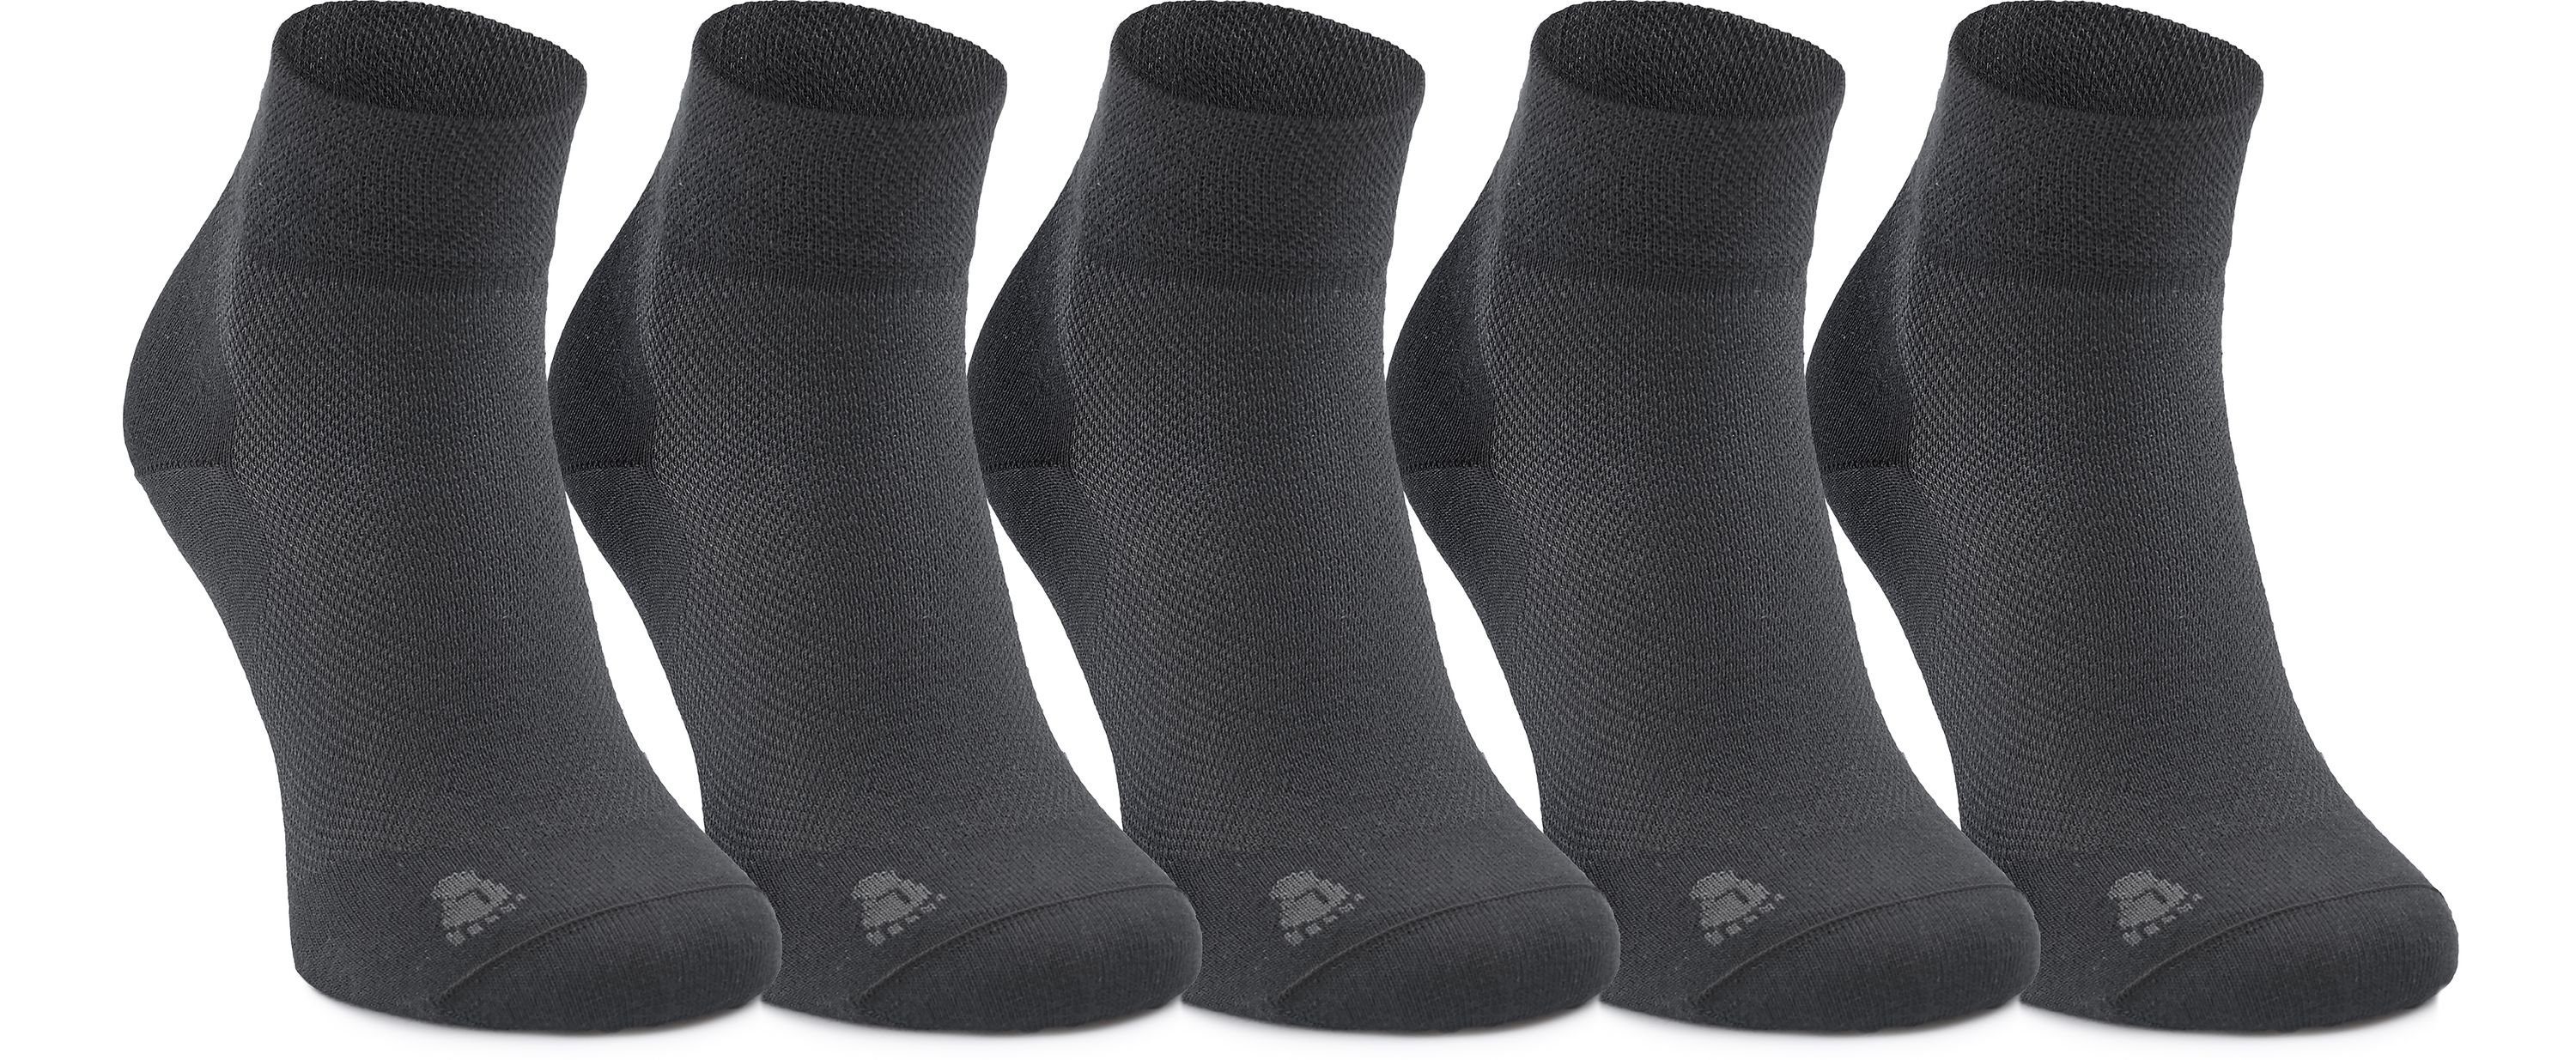 Ladeheid Socken Socken 5 Baumwolle Graphite Pack aus LASS0002 Unisex